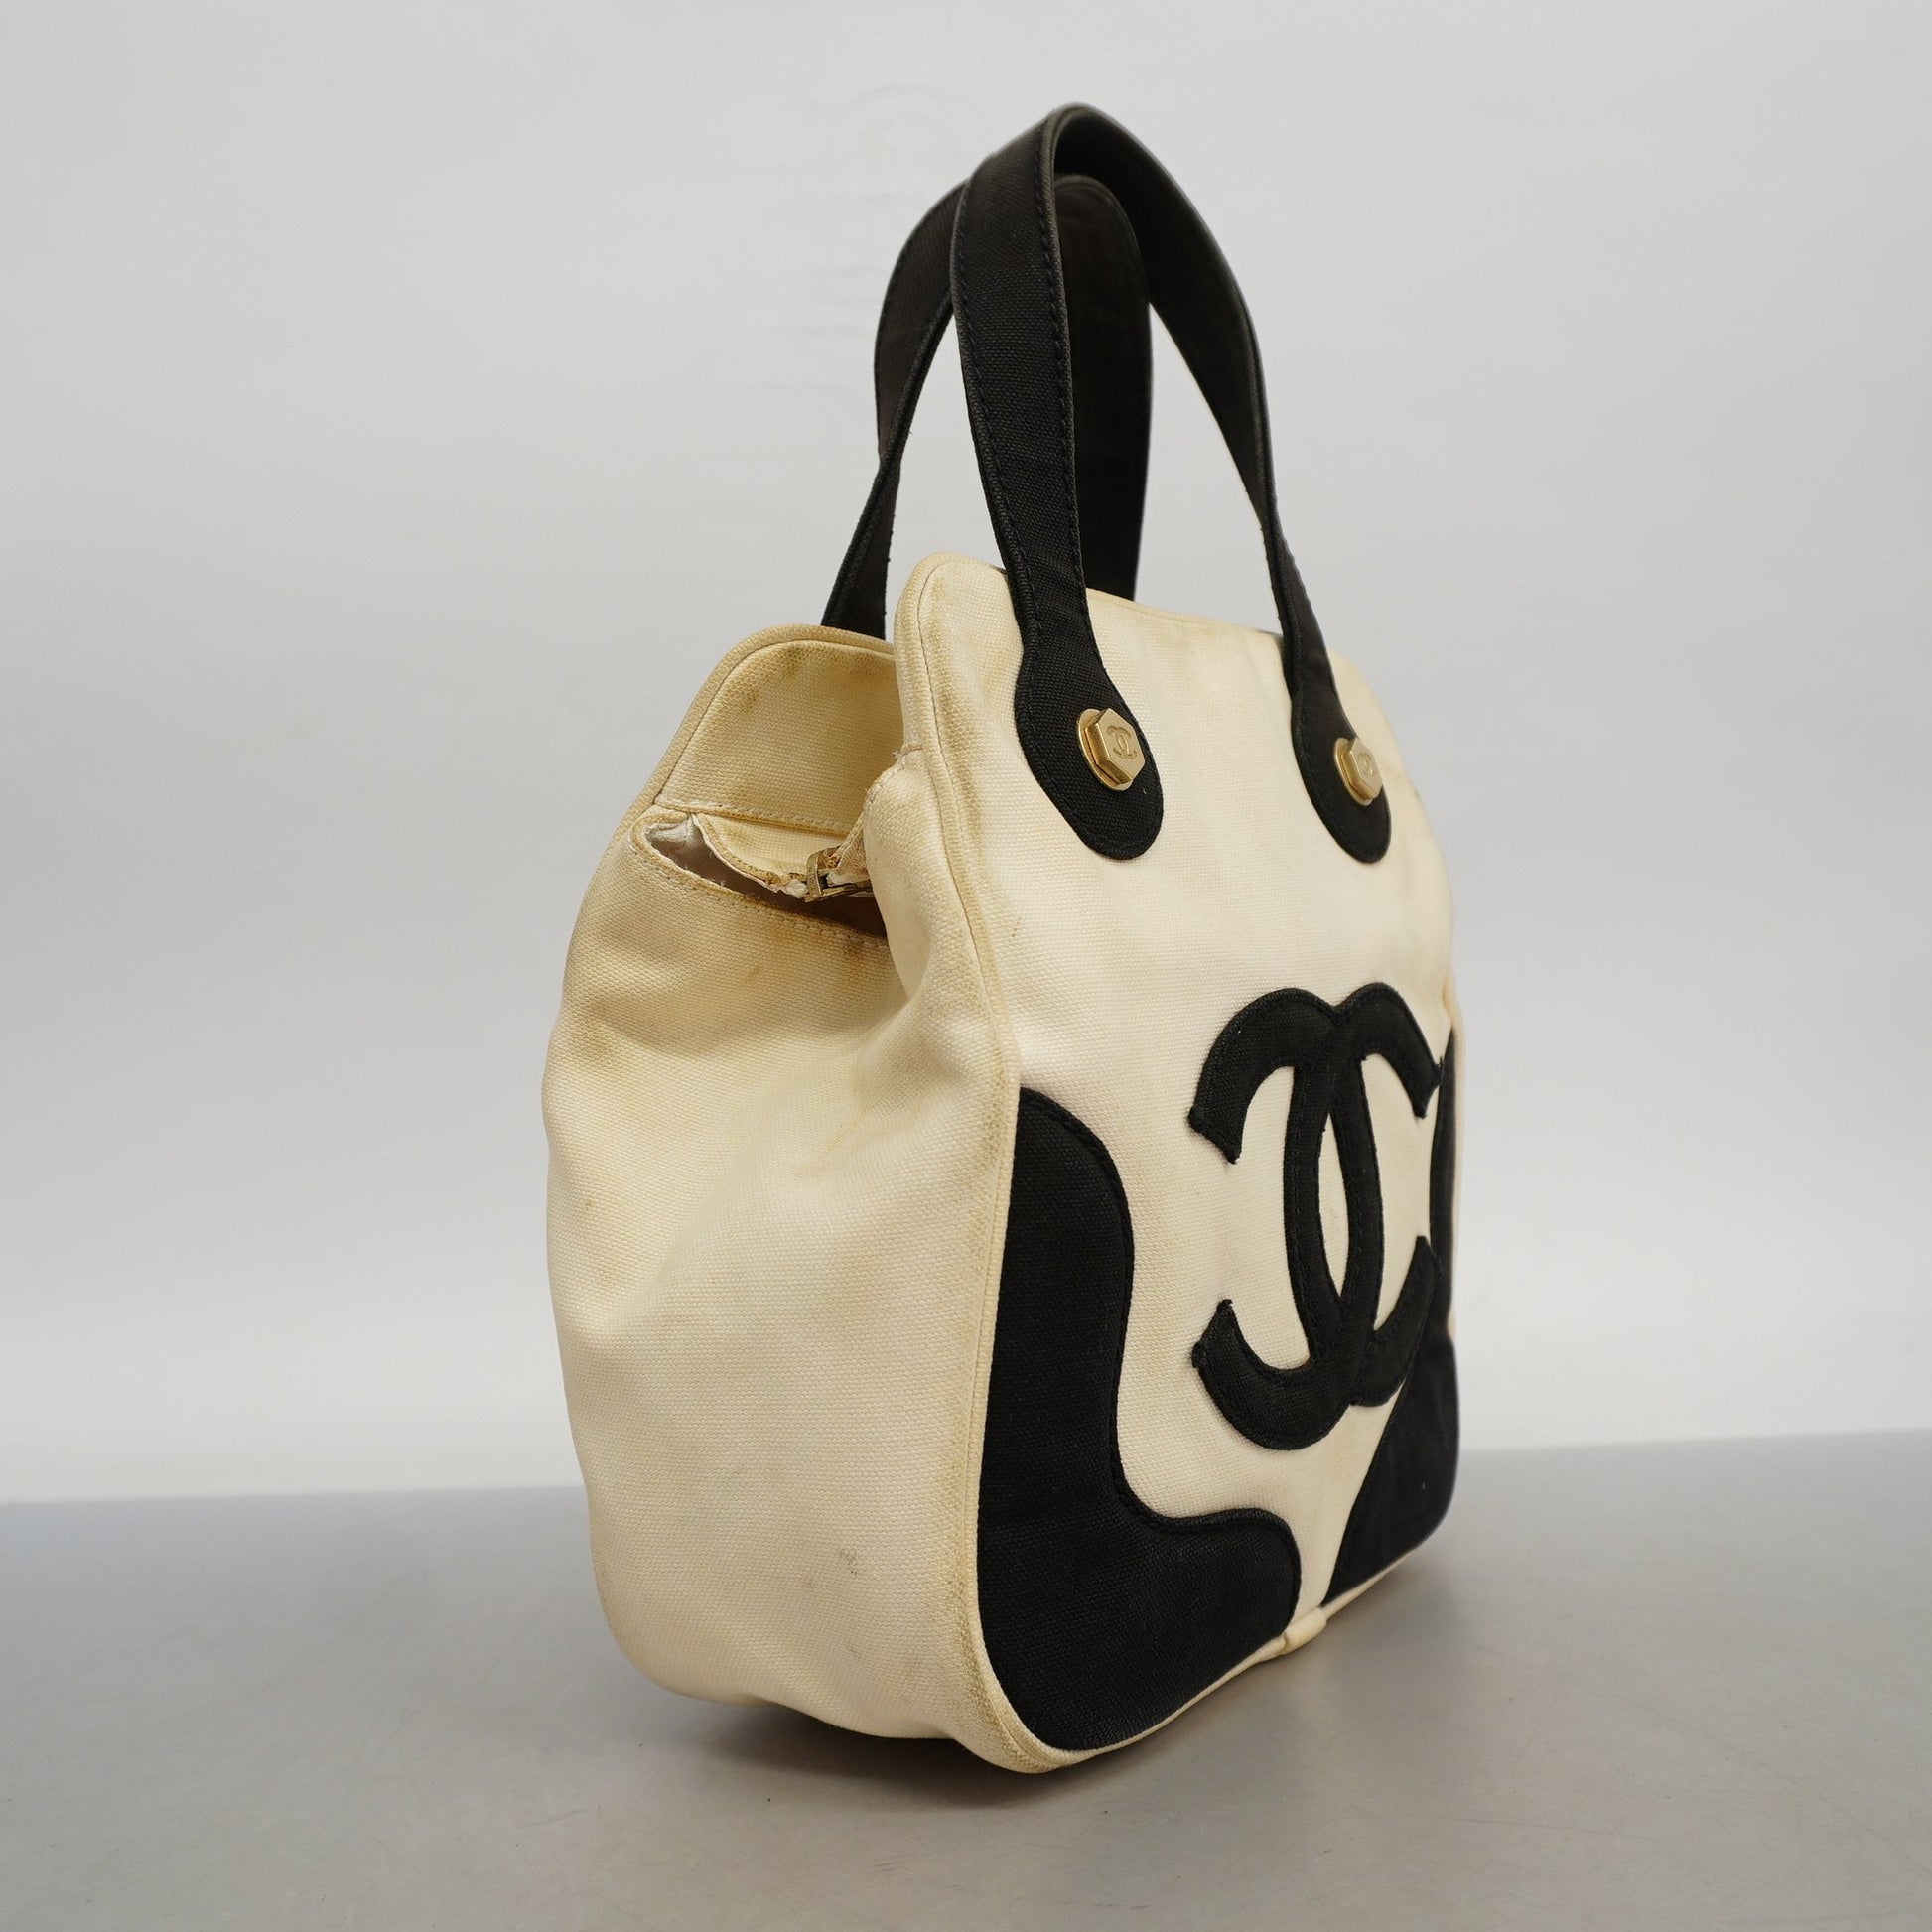 Chanel Tote Bag Marshmallow Women's Canvas Handbag Black,Ivory